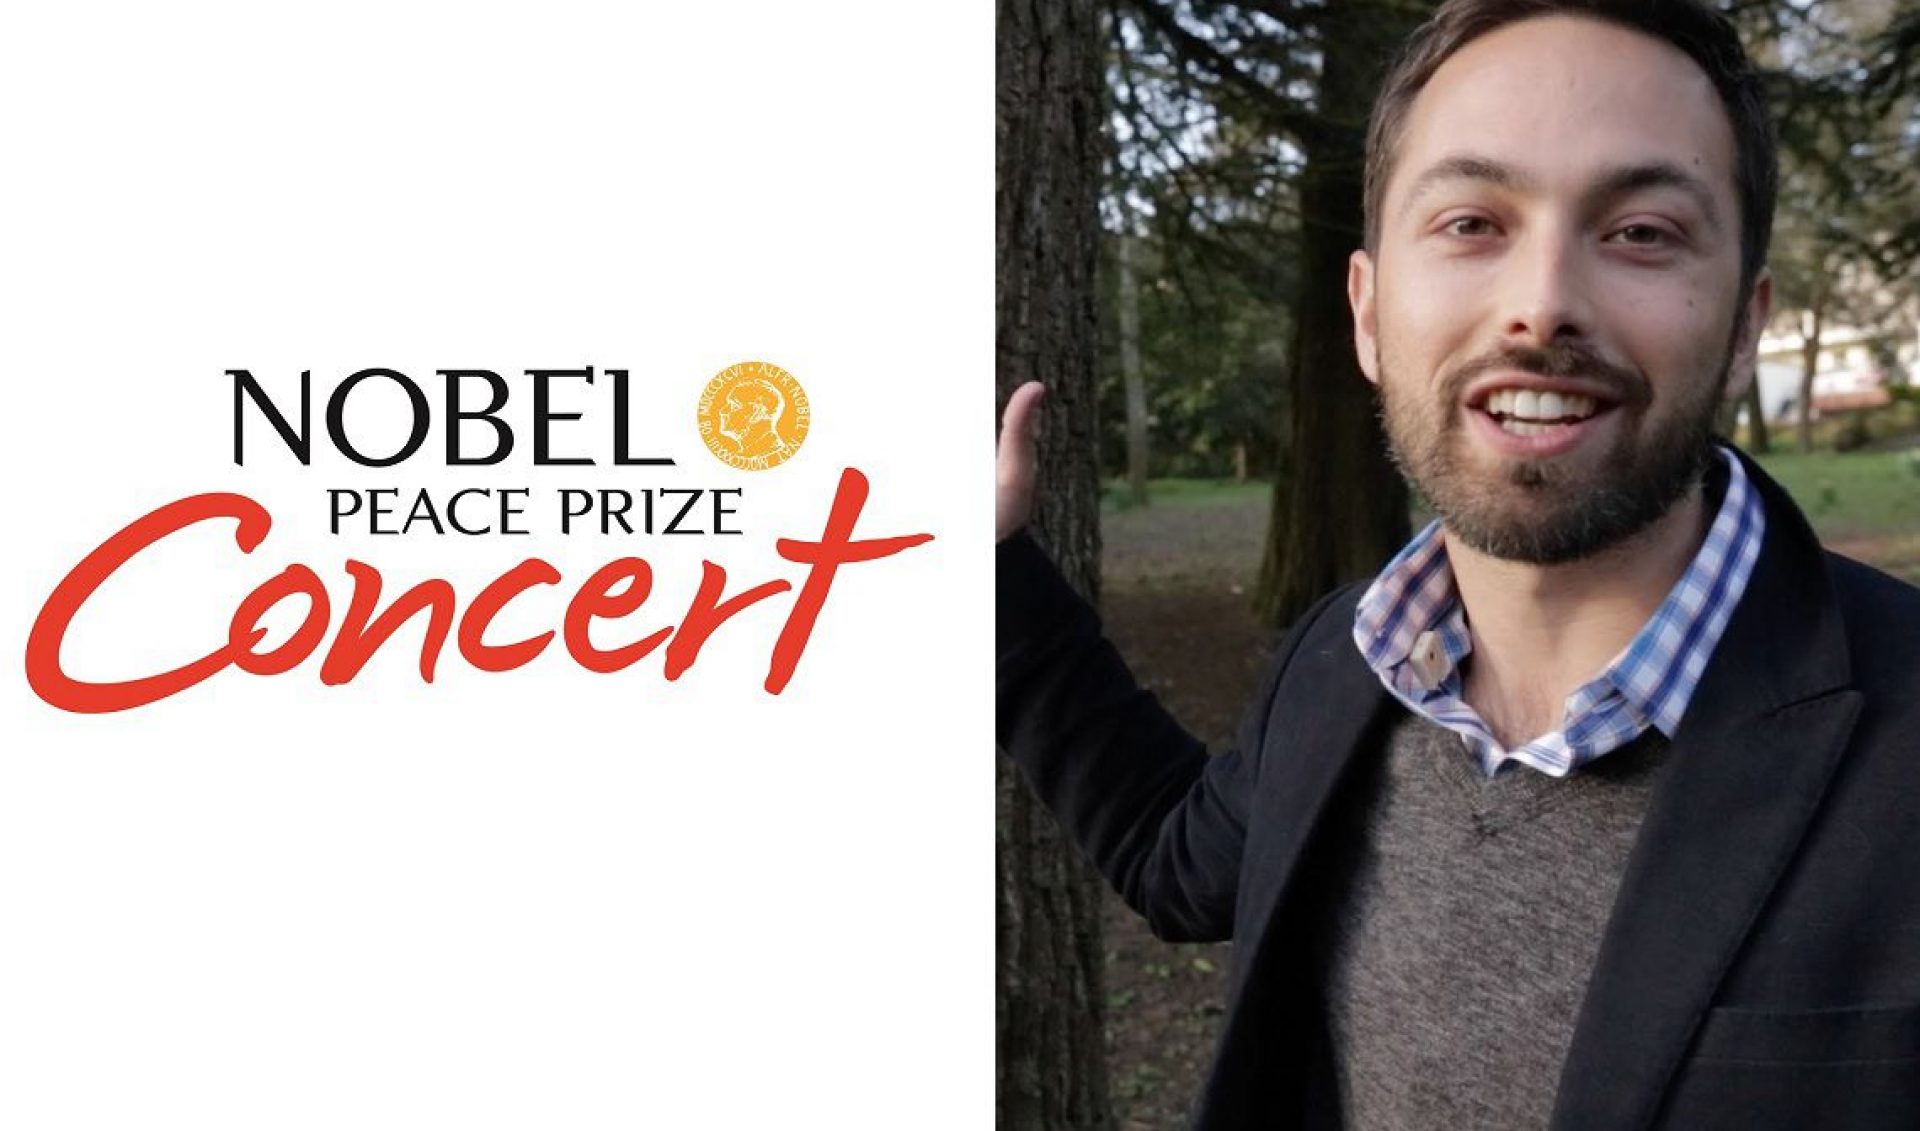 YouTube To Live Stream Nobel Peace Prize Concert, Veritasium To Host Pre-Show